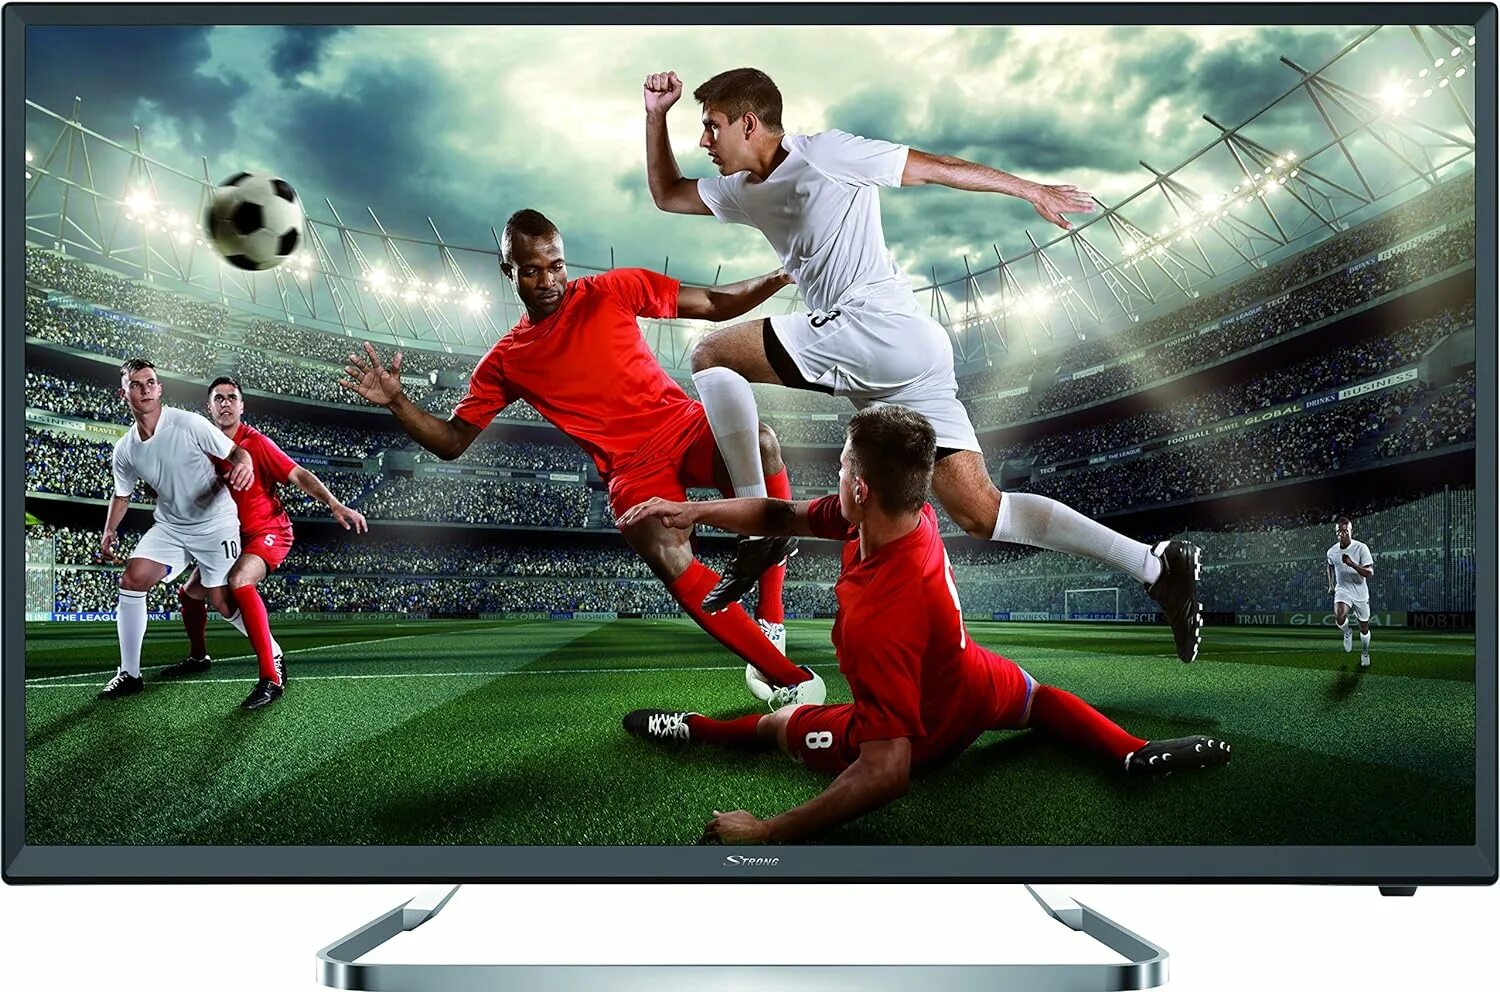 Телевизор strong srt 32hz4003nw 32" (2017). Телевизор футбол. Телевизор с футболом картинка. Футбол на экране телевизора.